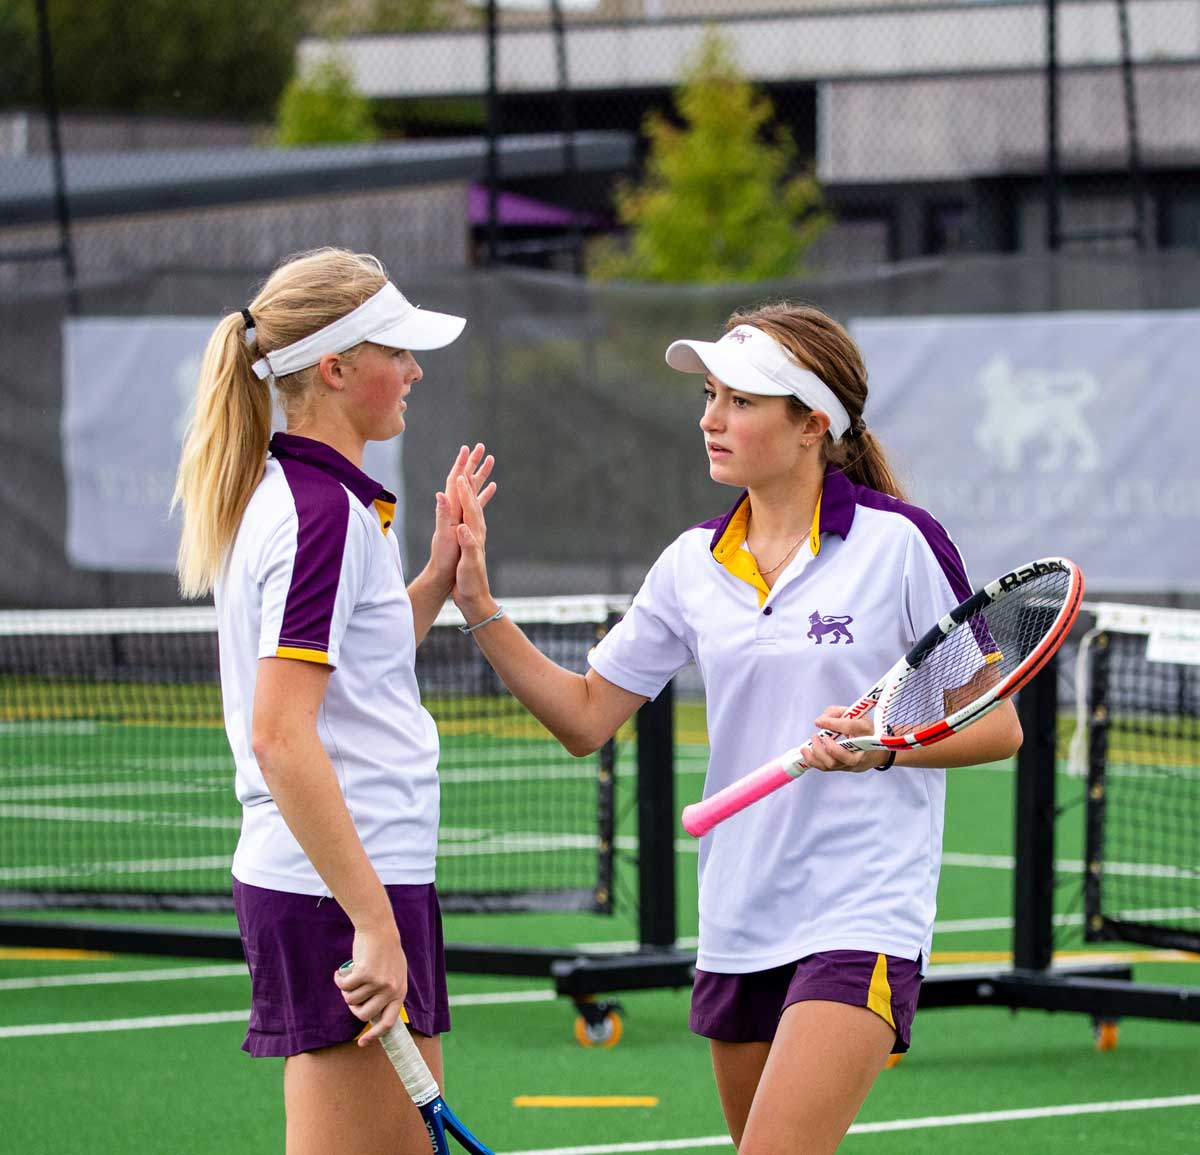 Girls tennis players high-five each other